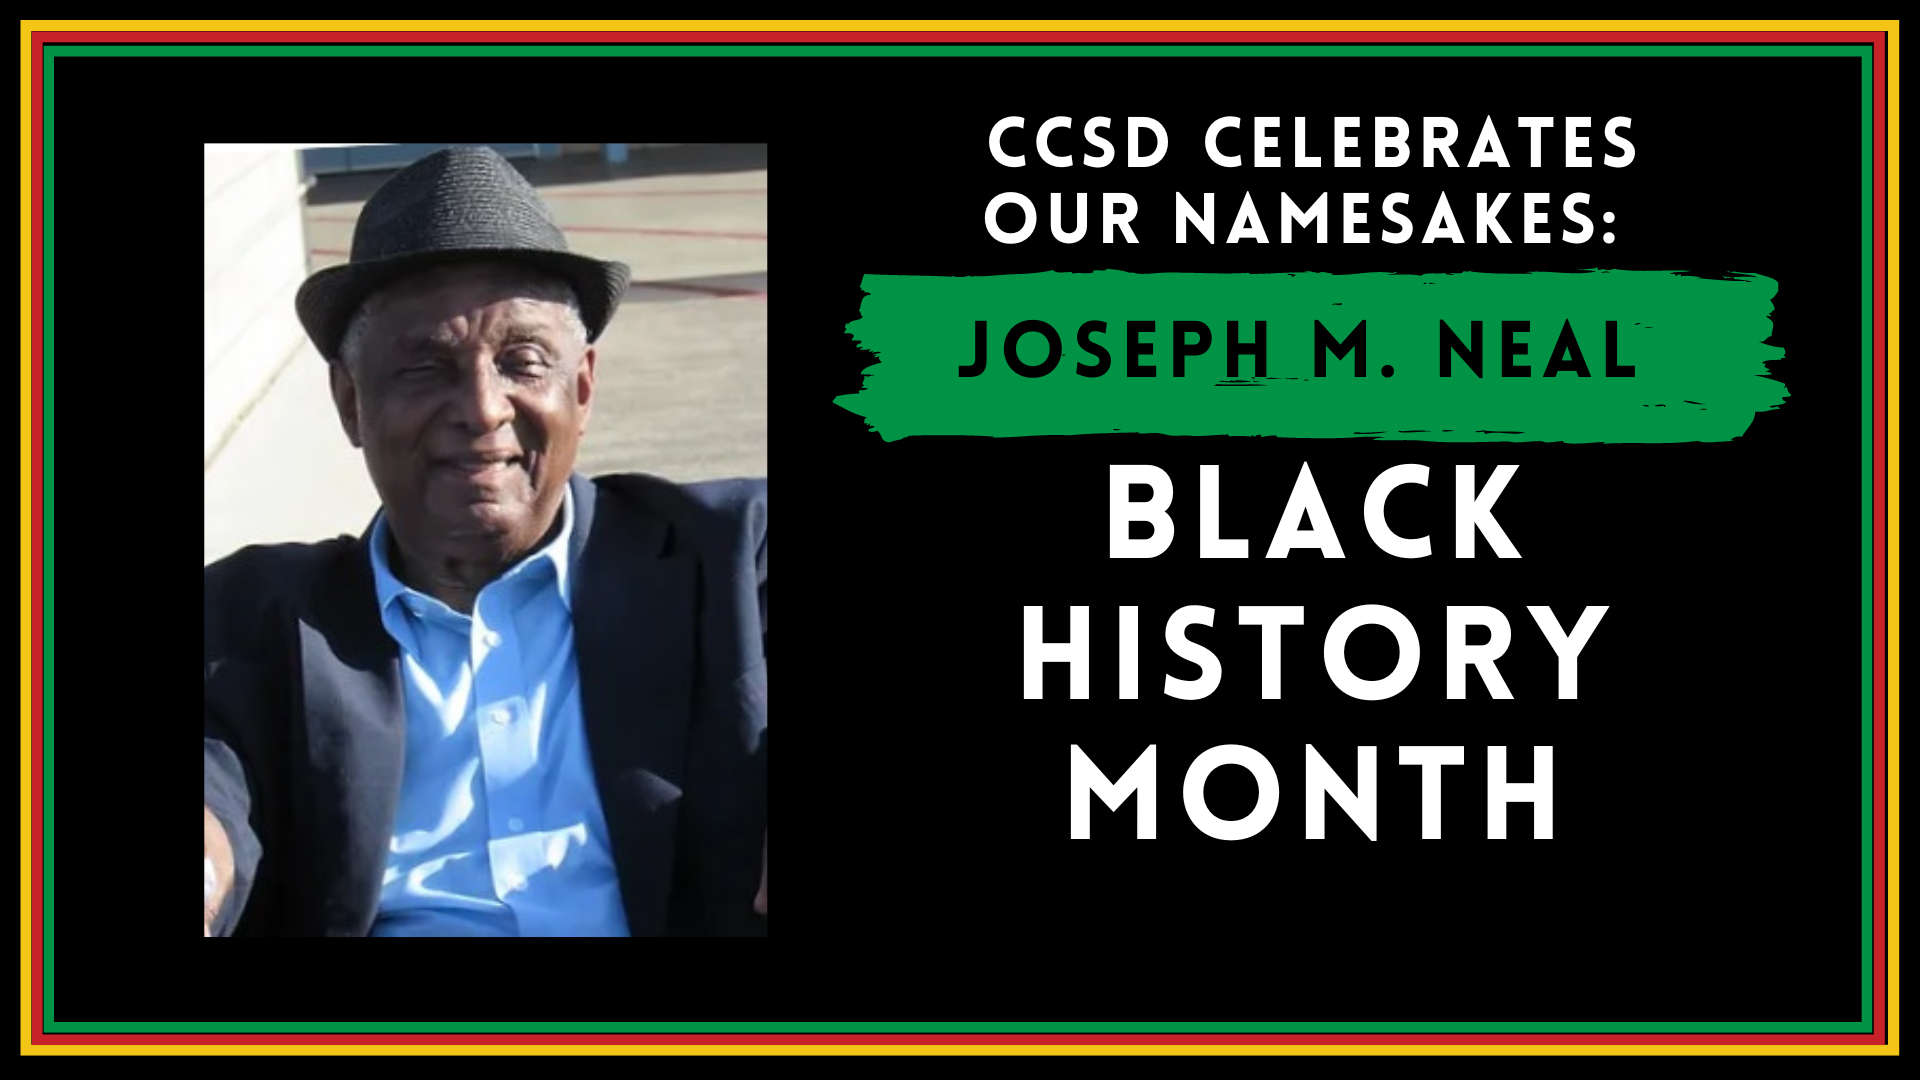 CCSD celebrates its namesakes: Joseph M. Neal